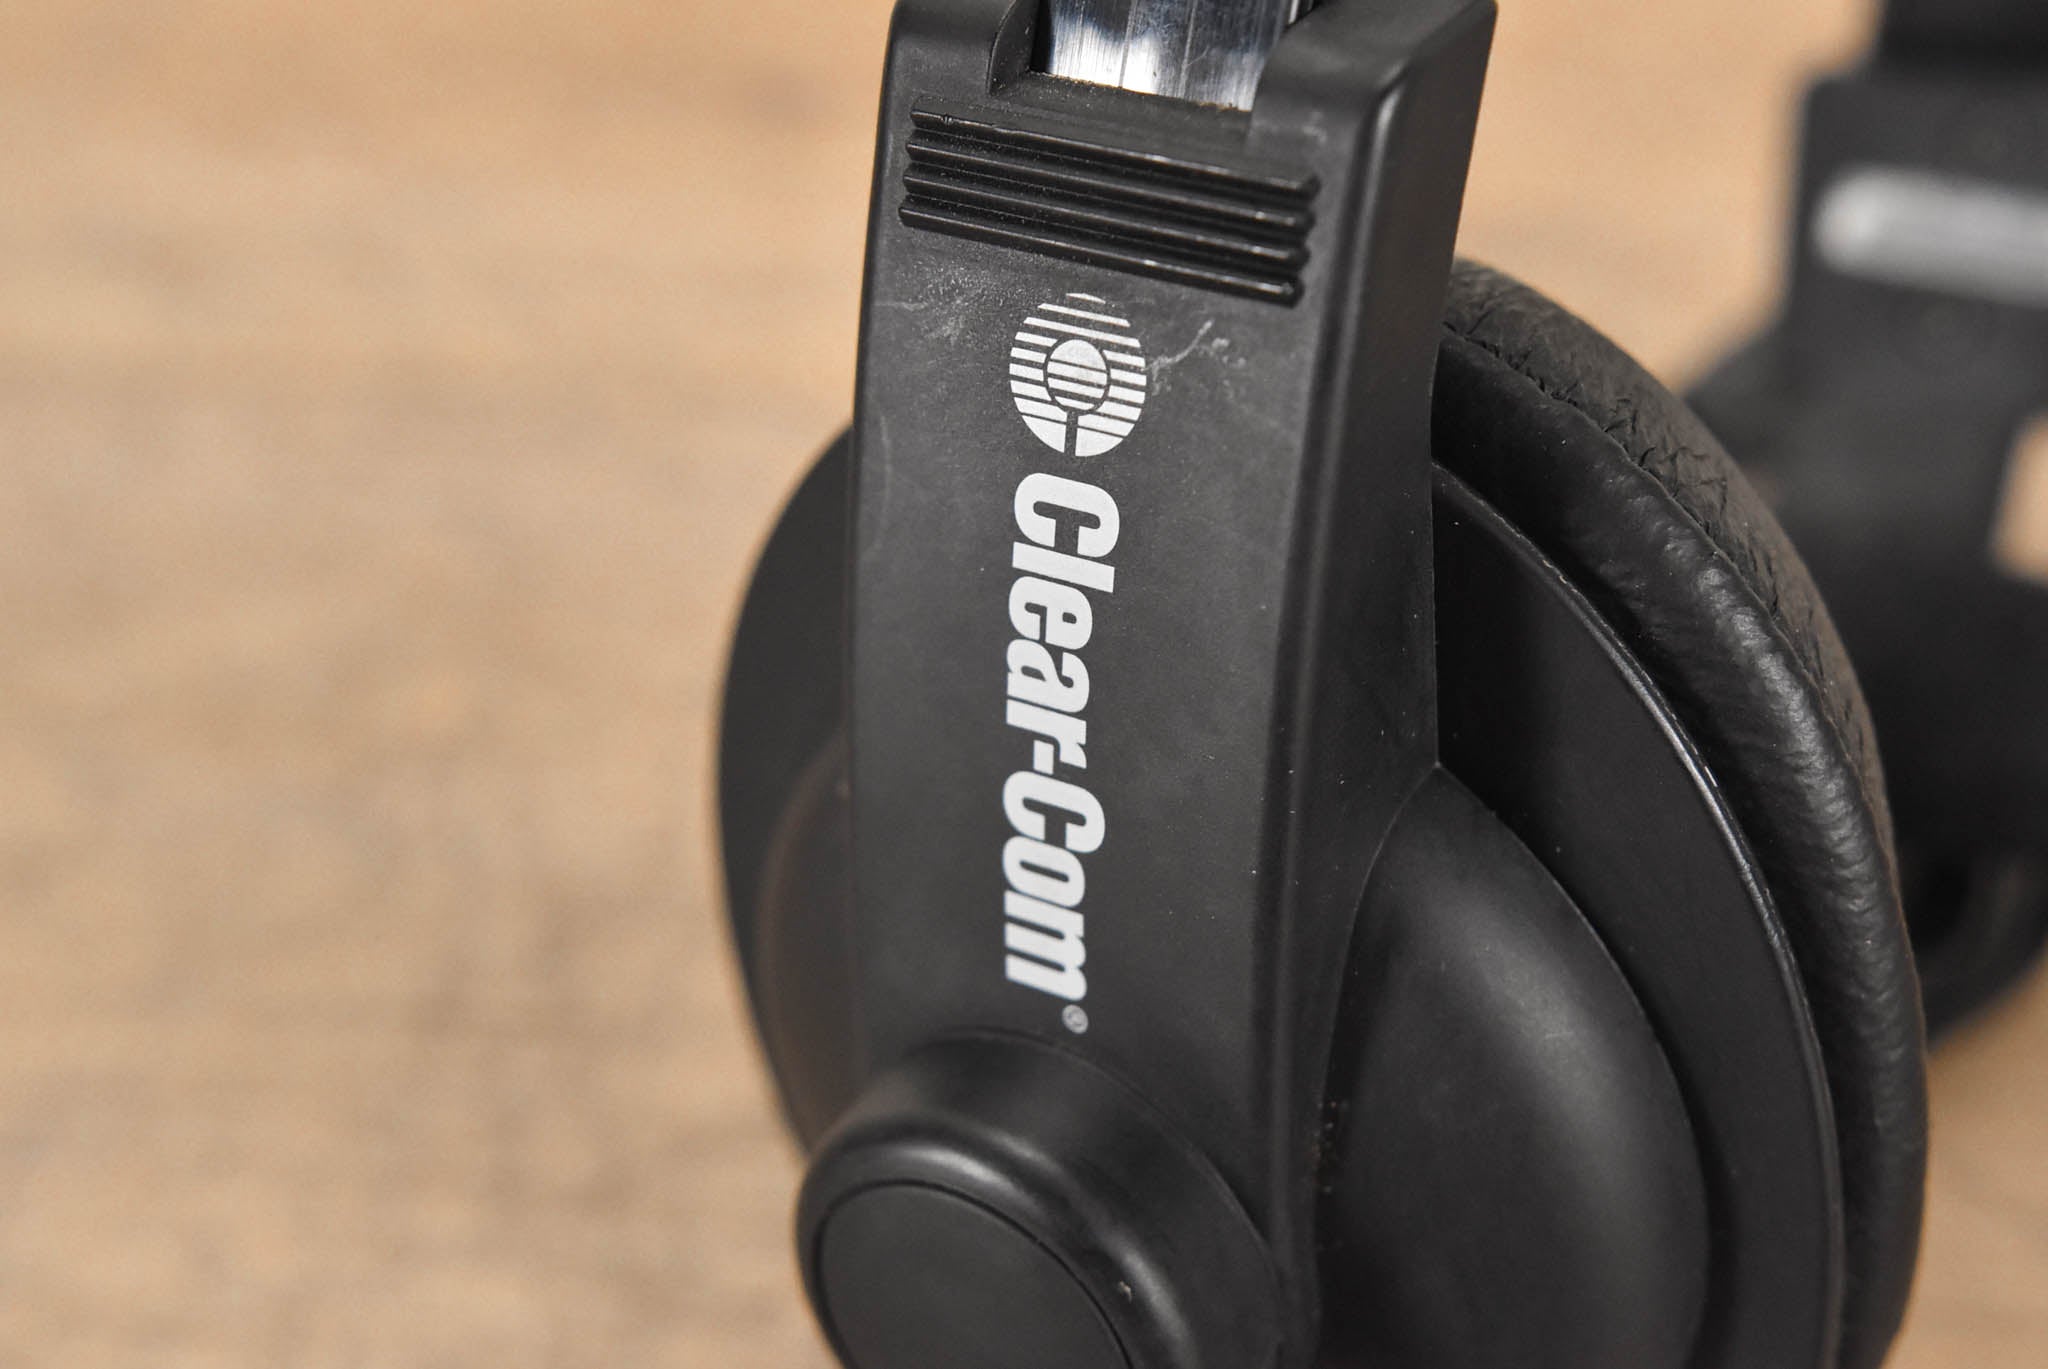 Clear-Com CC-15-MD4 Single-Ear Intercom Headset with Mini DIN Connector